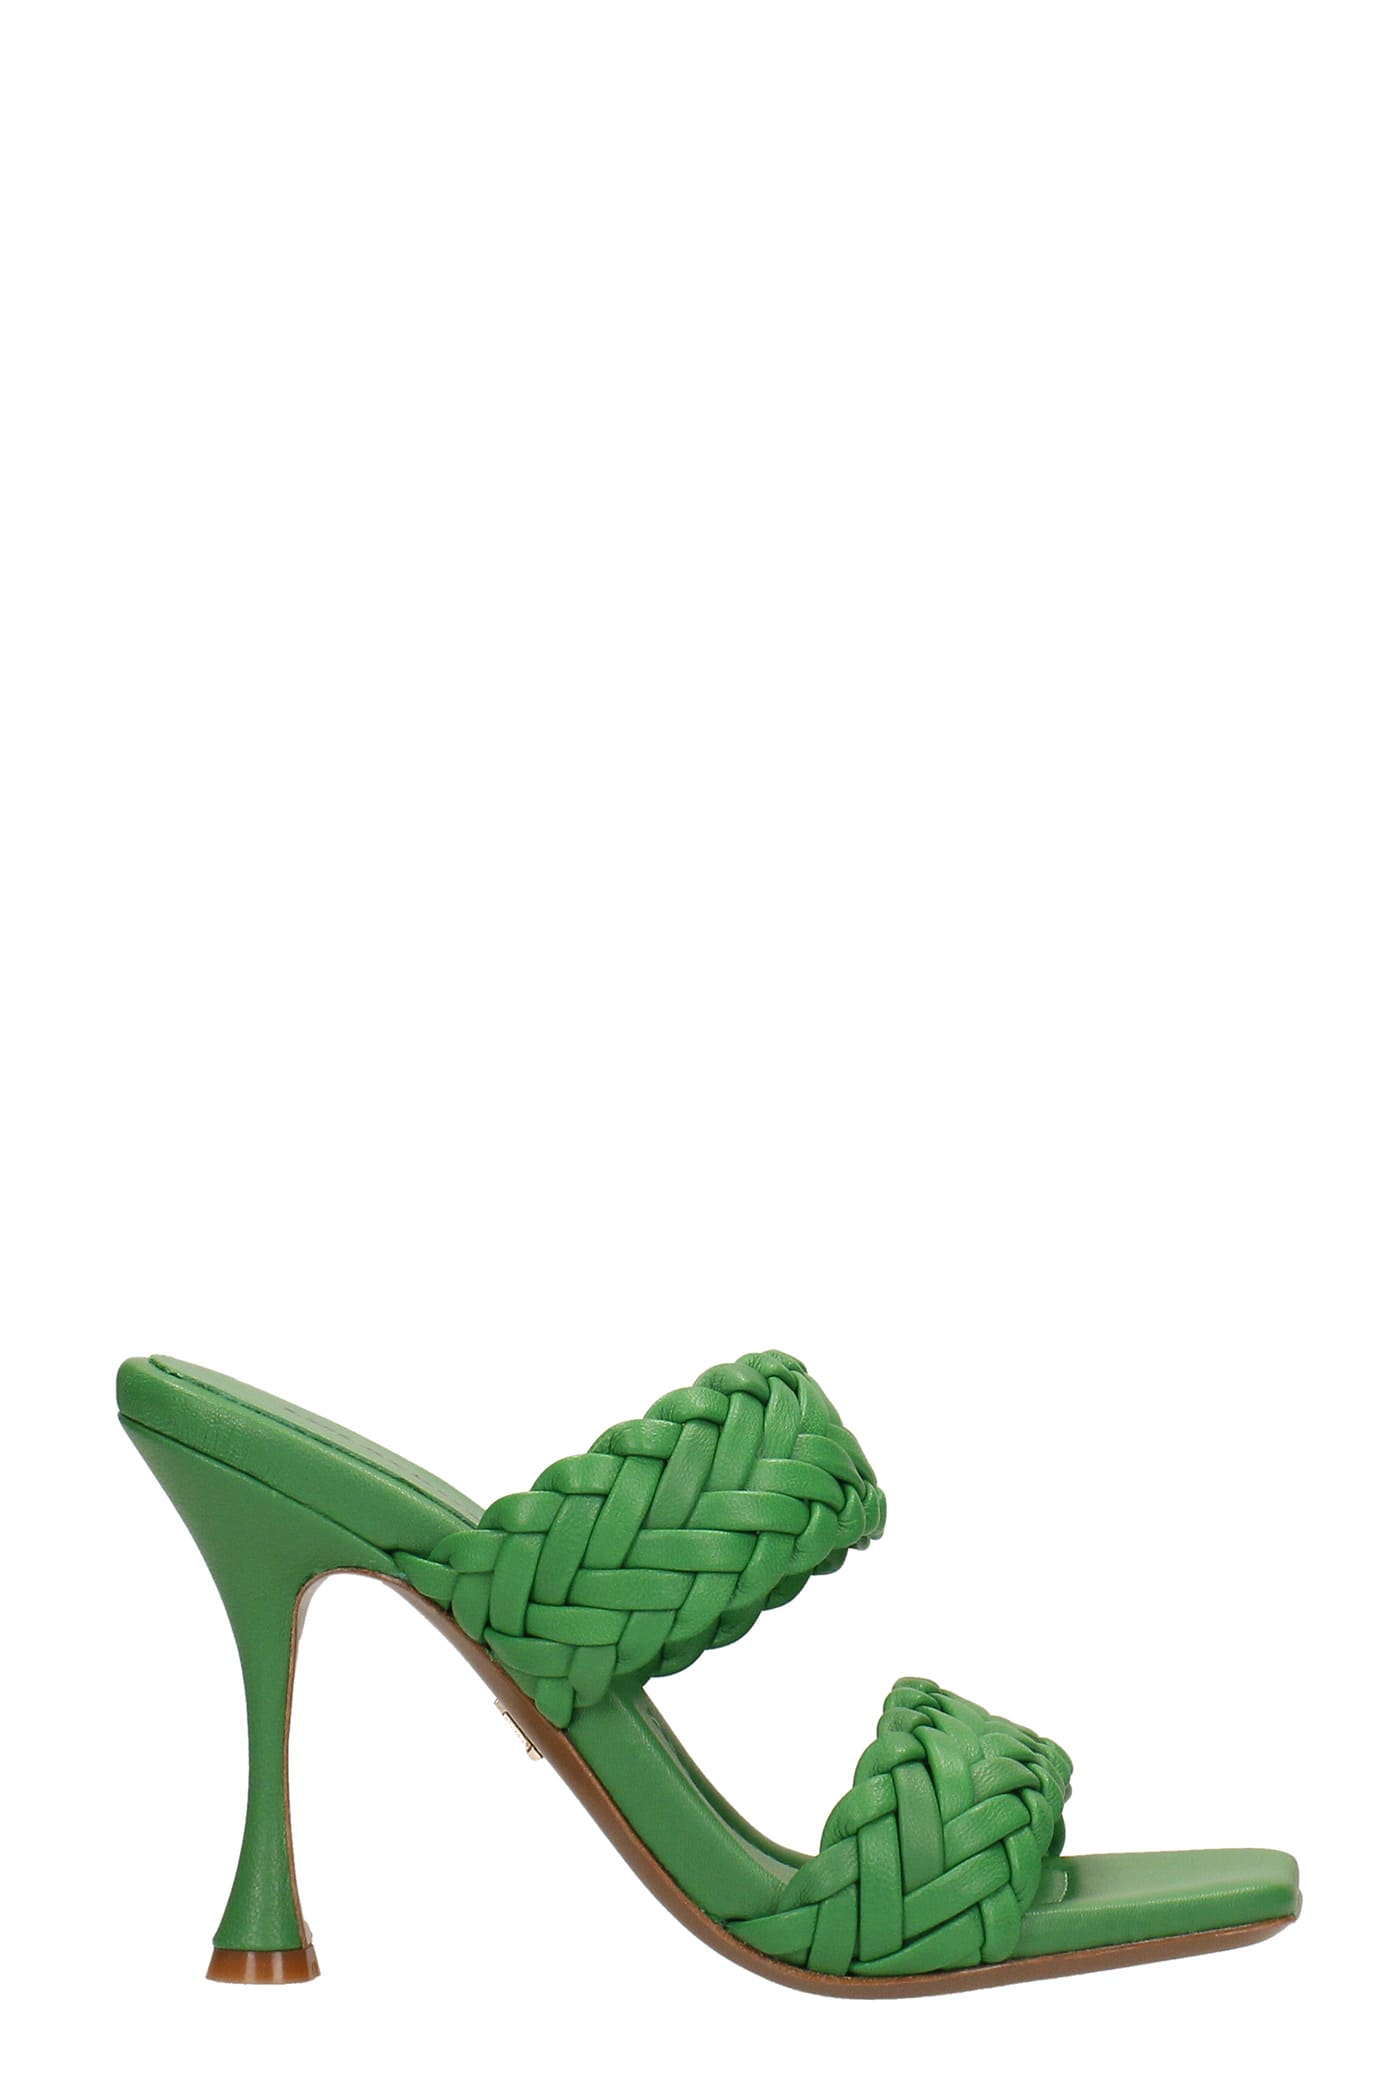 lola cruz sandals in green leather